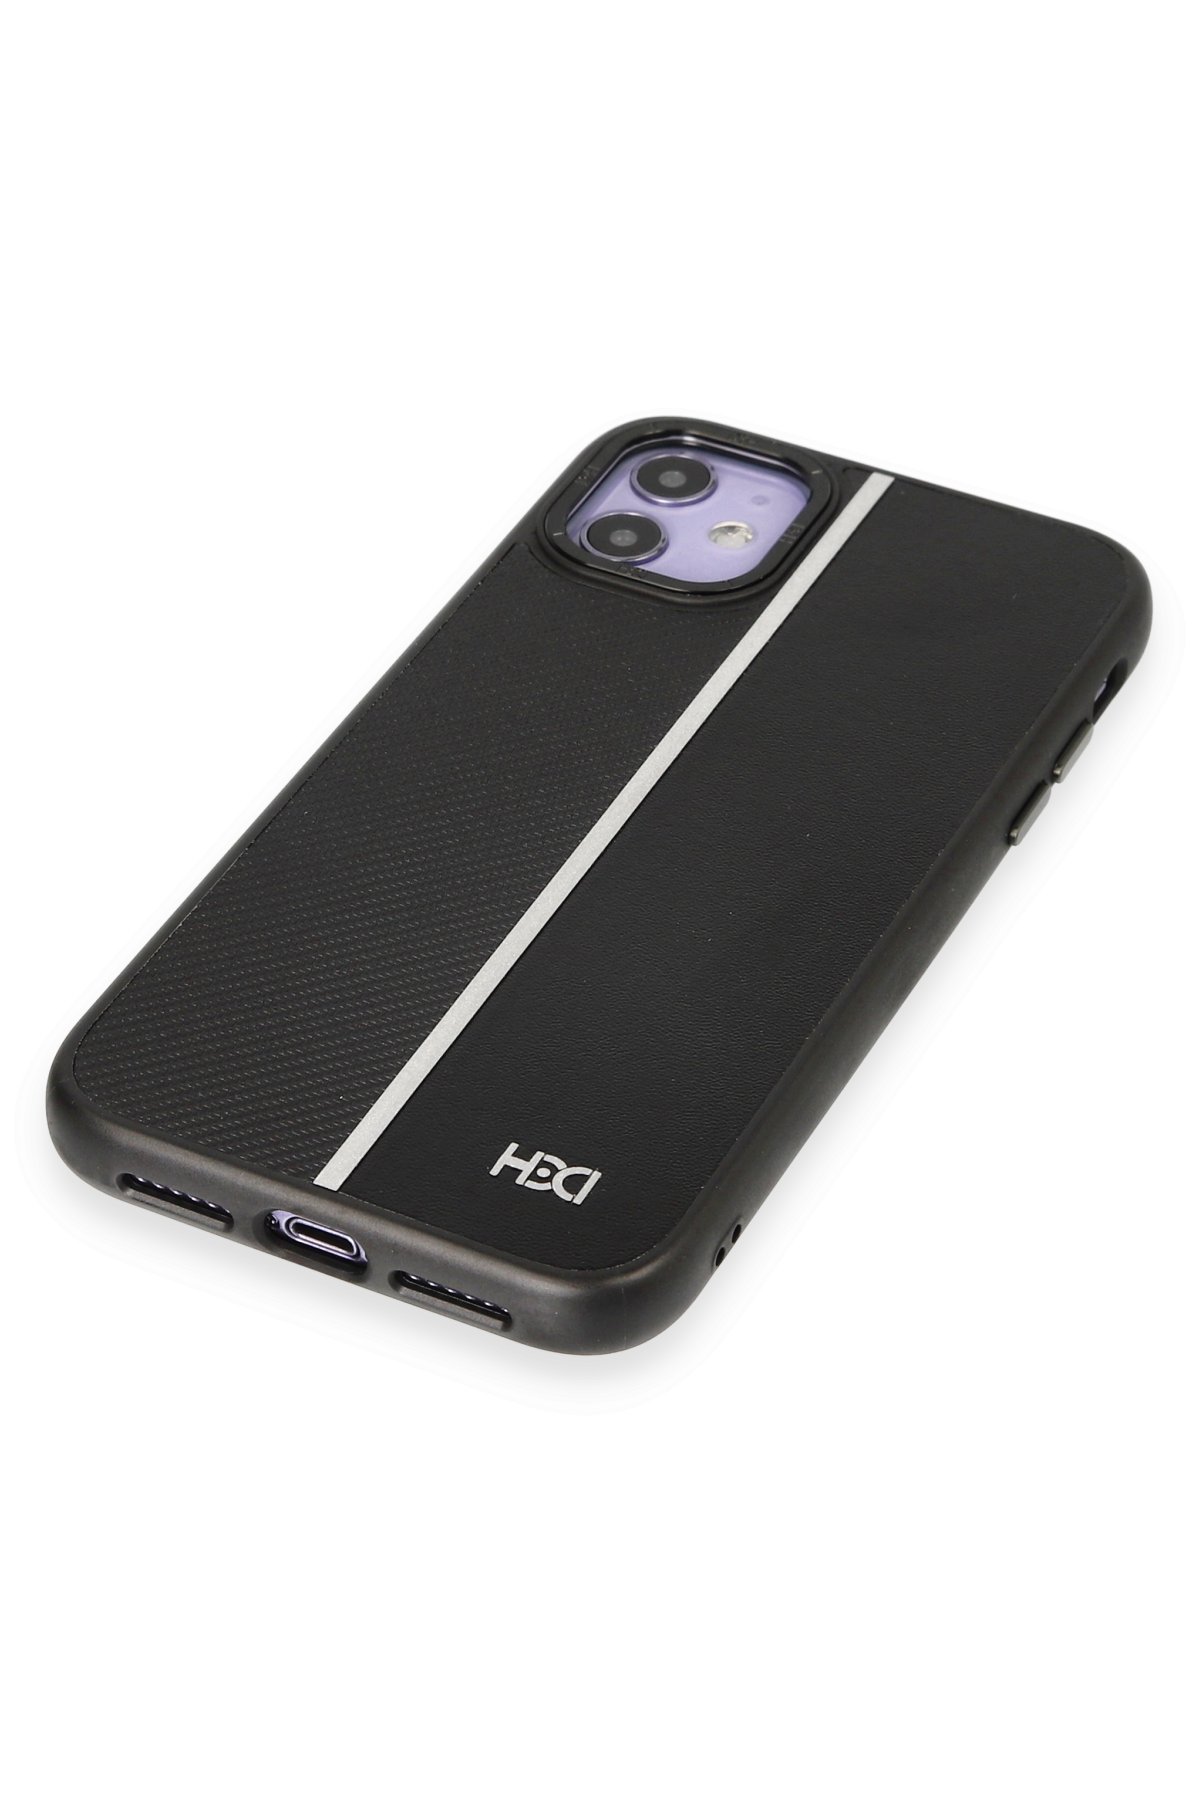 HDD iPhone 11 Kılıf HD Deri Luxury Magnet Kartvizitli Kapak - Siyah